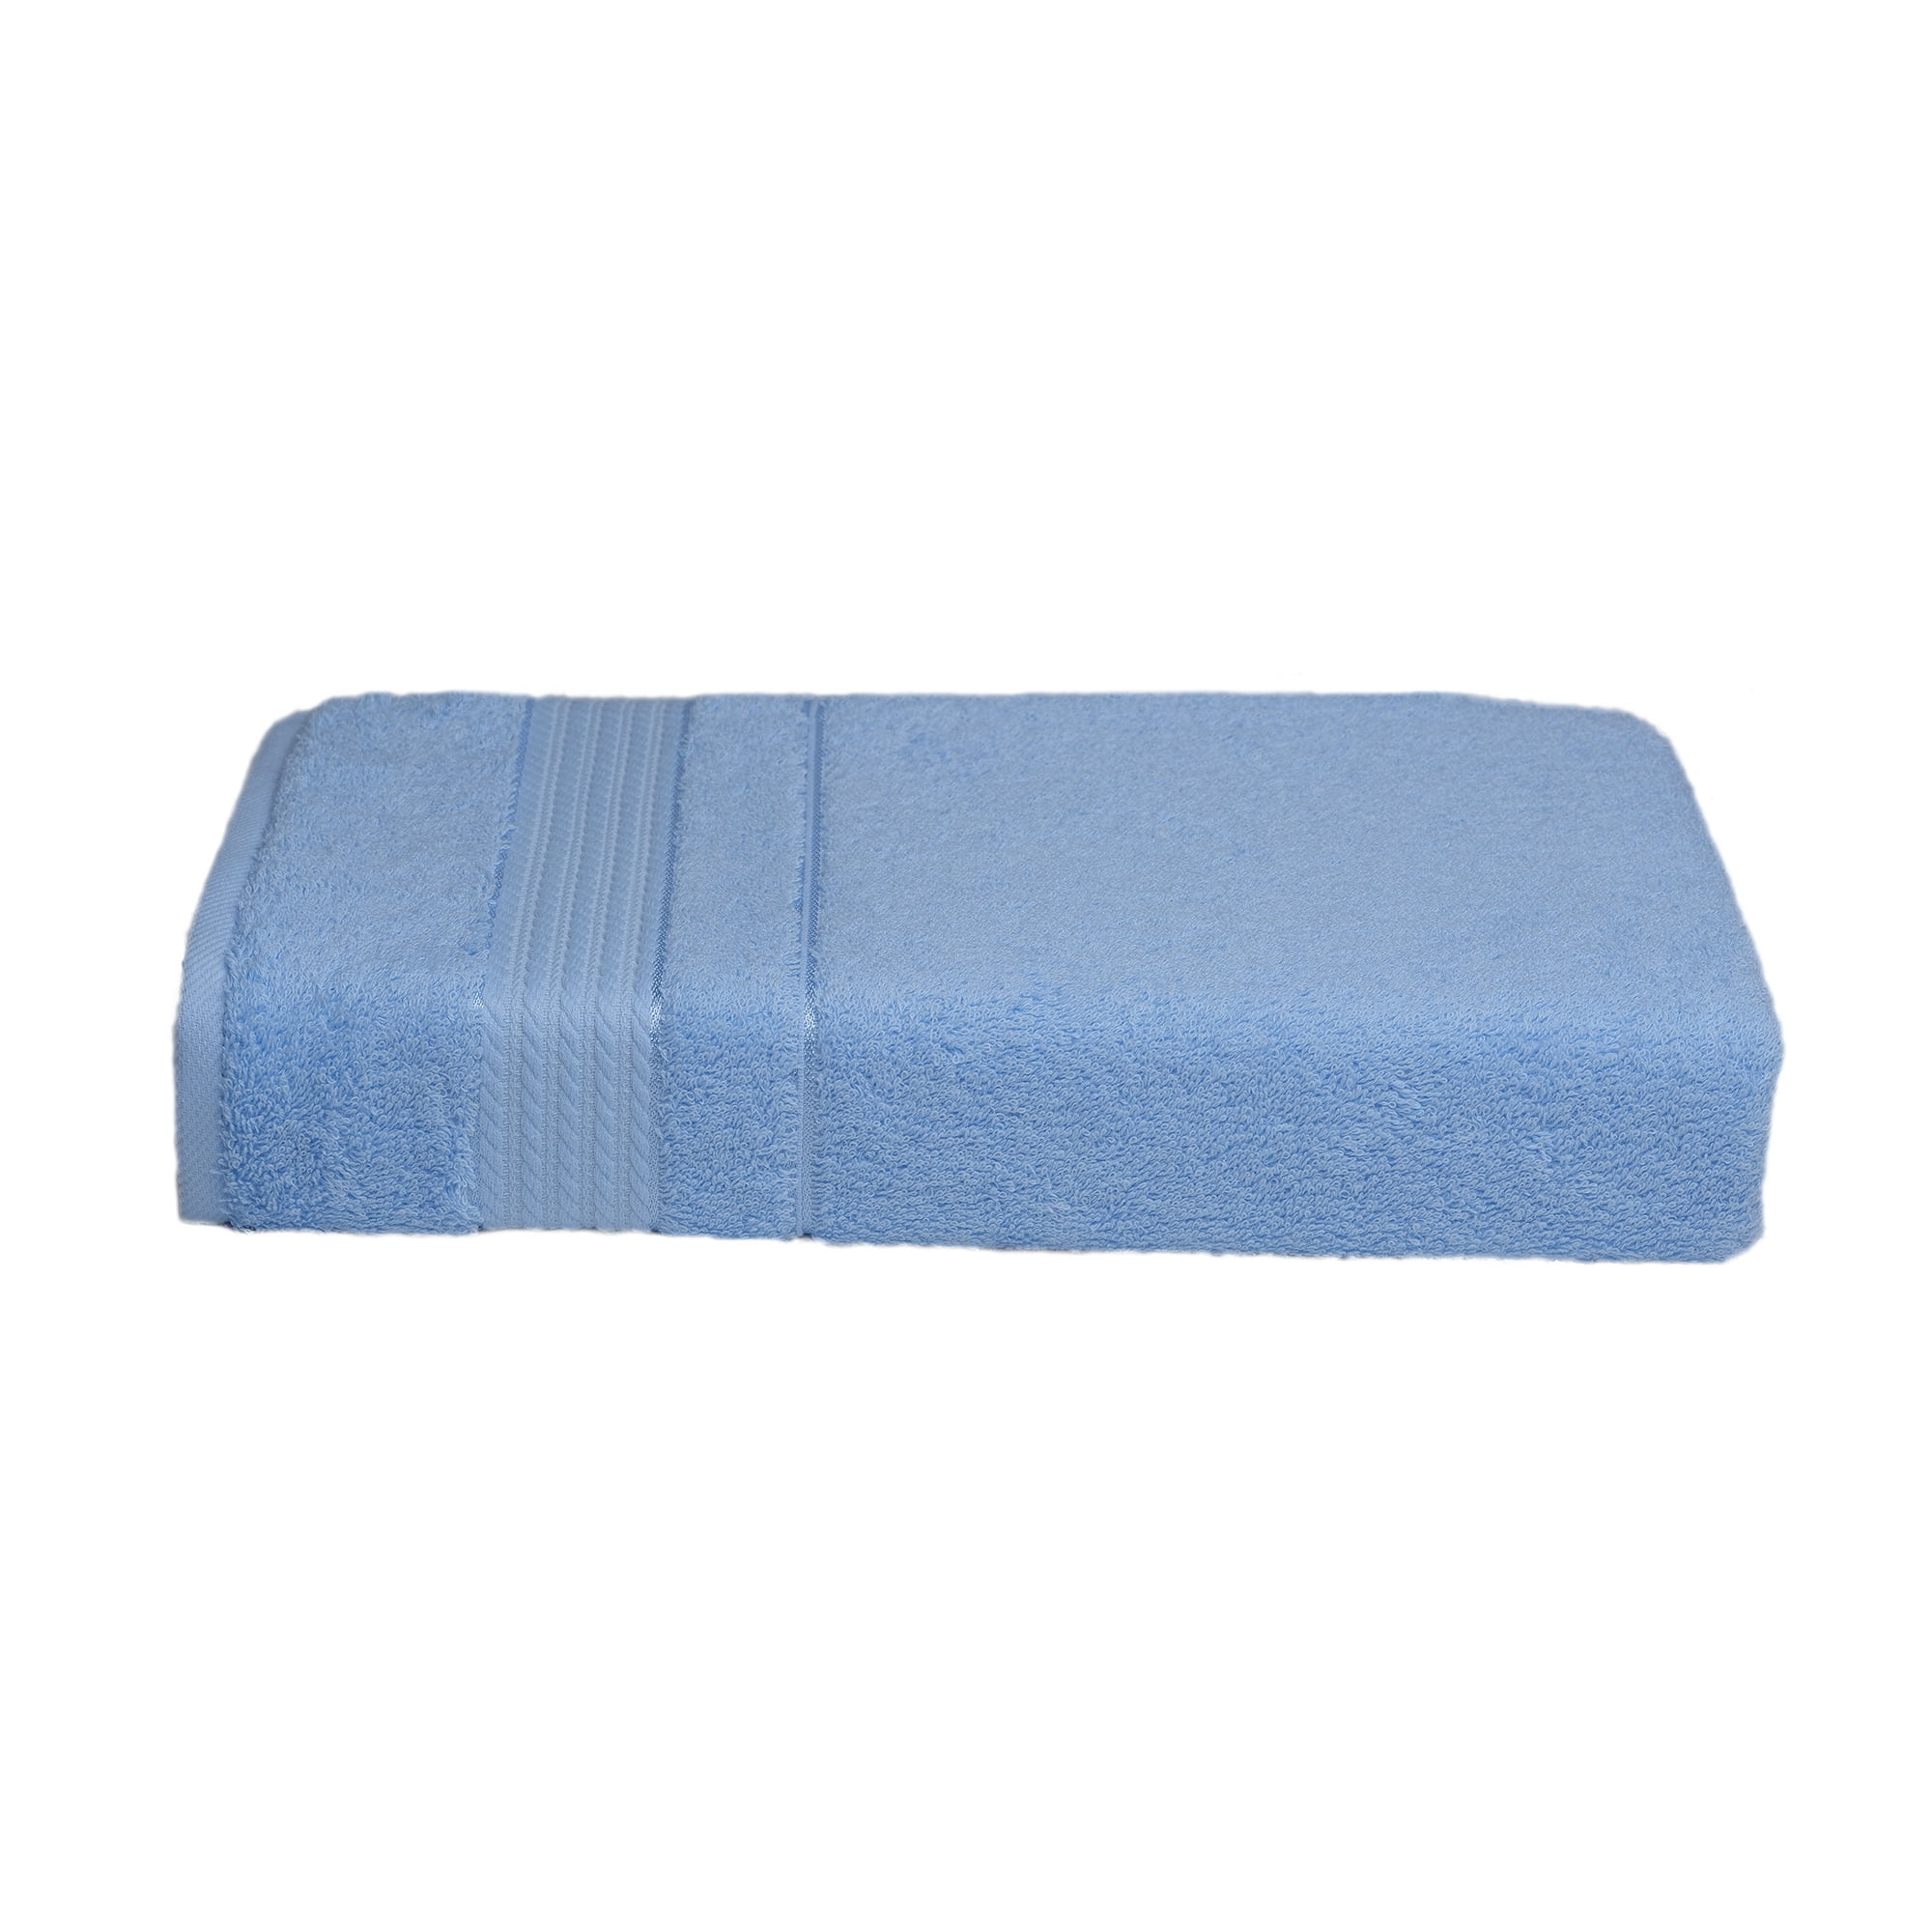 Melissa Linen, 2 Piece Hand Towel Pack Premium Cotton Soft Absorbent 20 x 35 in, Mint Green, Size: Hand Towels